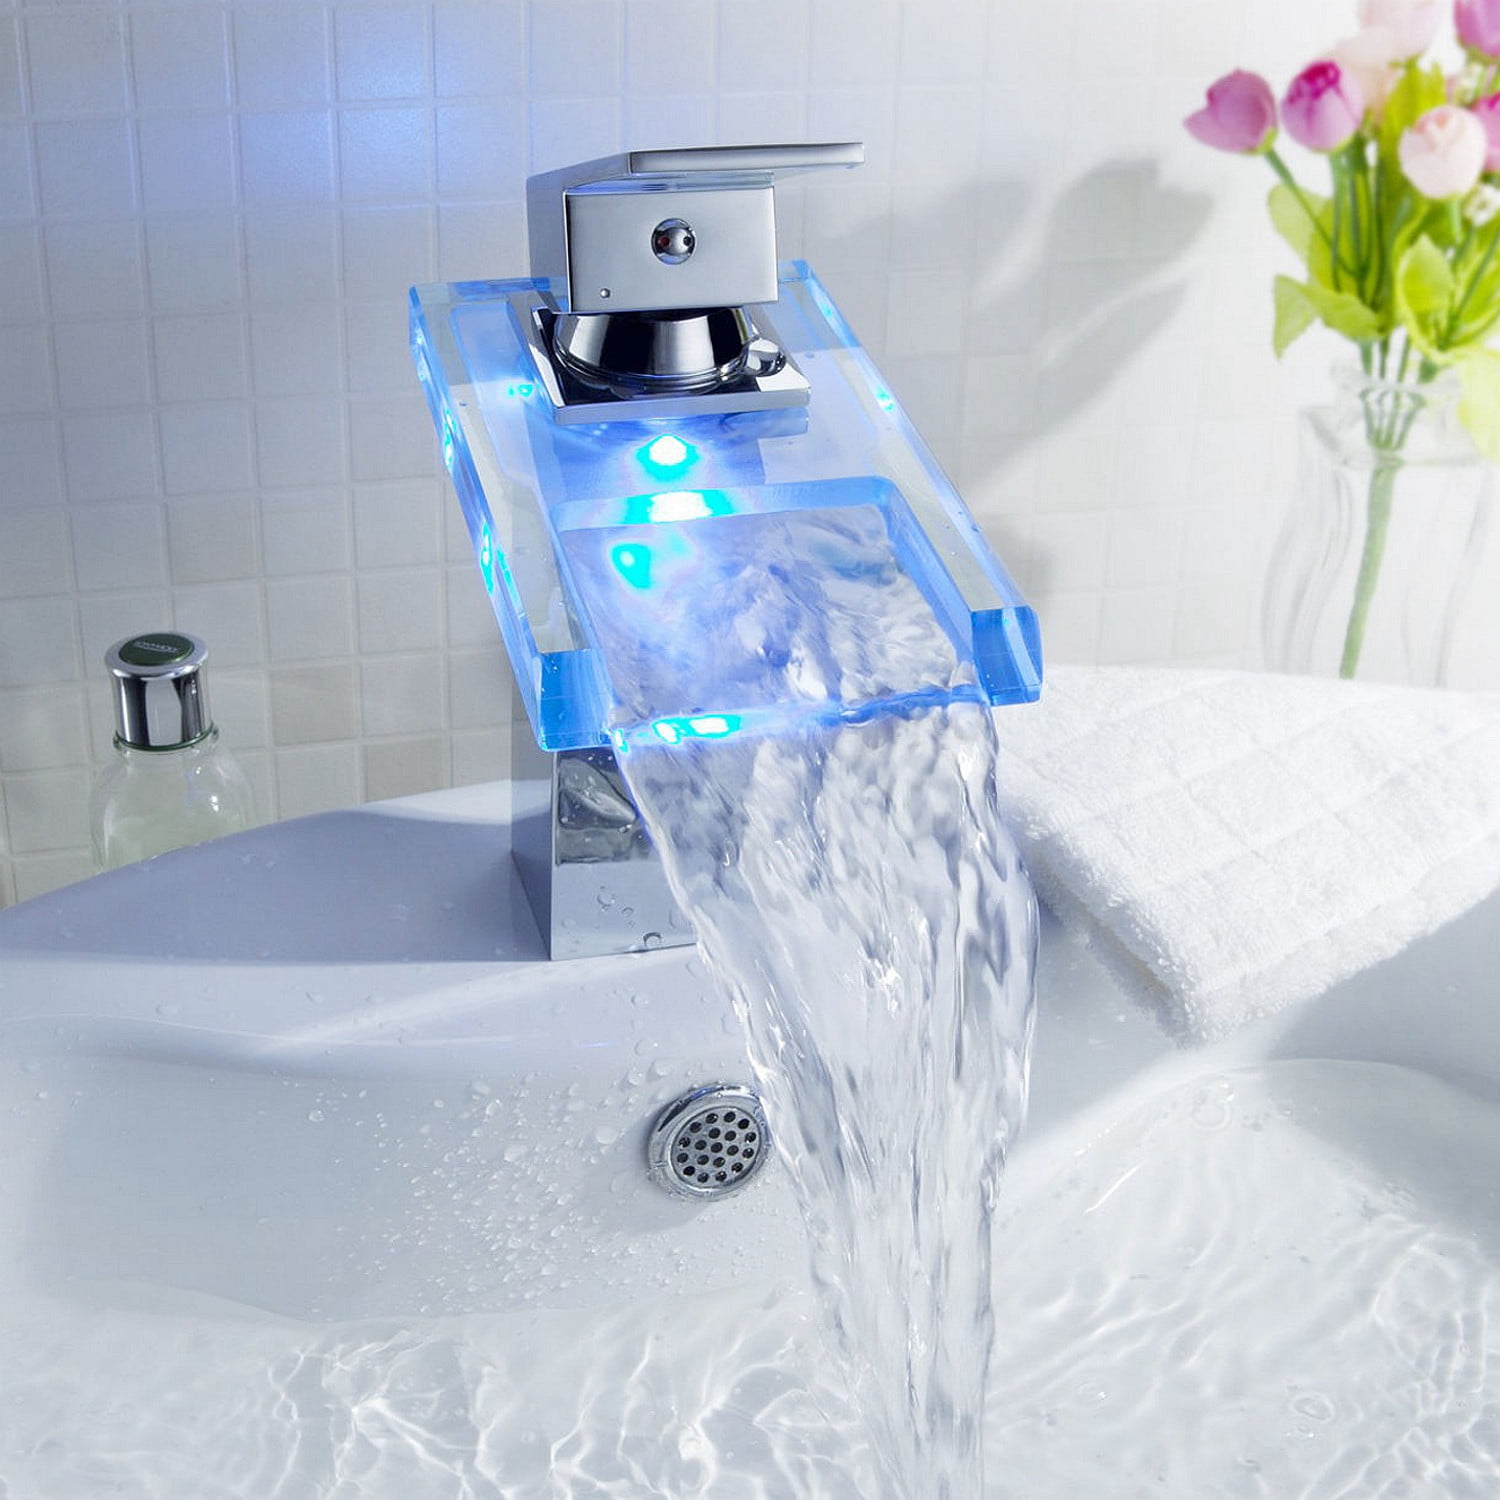 Chrome MENATT LED Light Bathroom Sink Faucet Single Handle Single Hole Cold and Hot Water Mixer Deck Mounted Bathroom Tap 3 Colors Changing Spout Bathroom Faucet